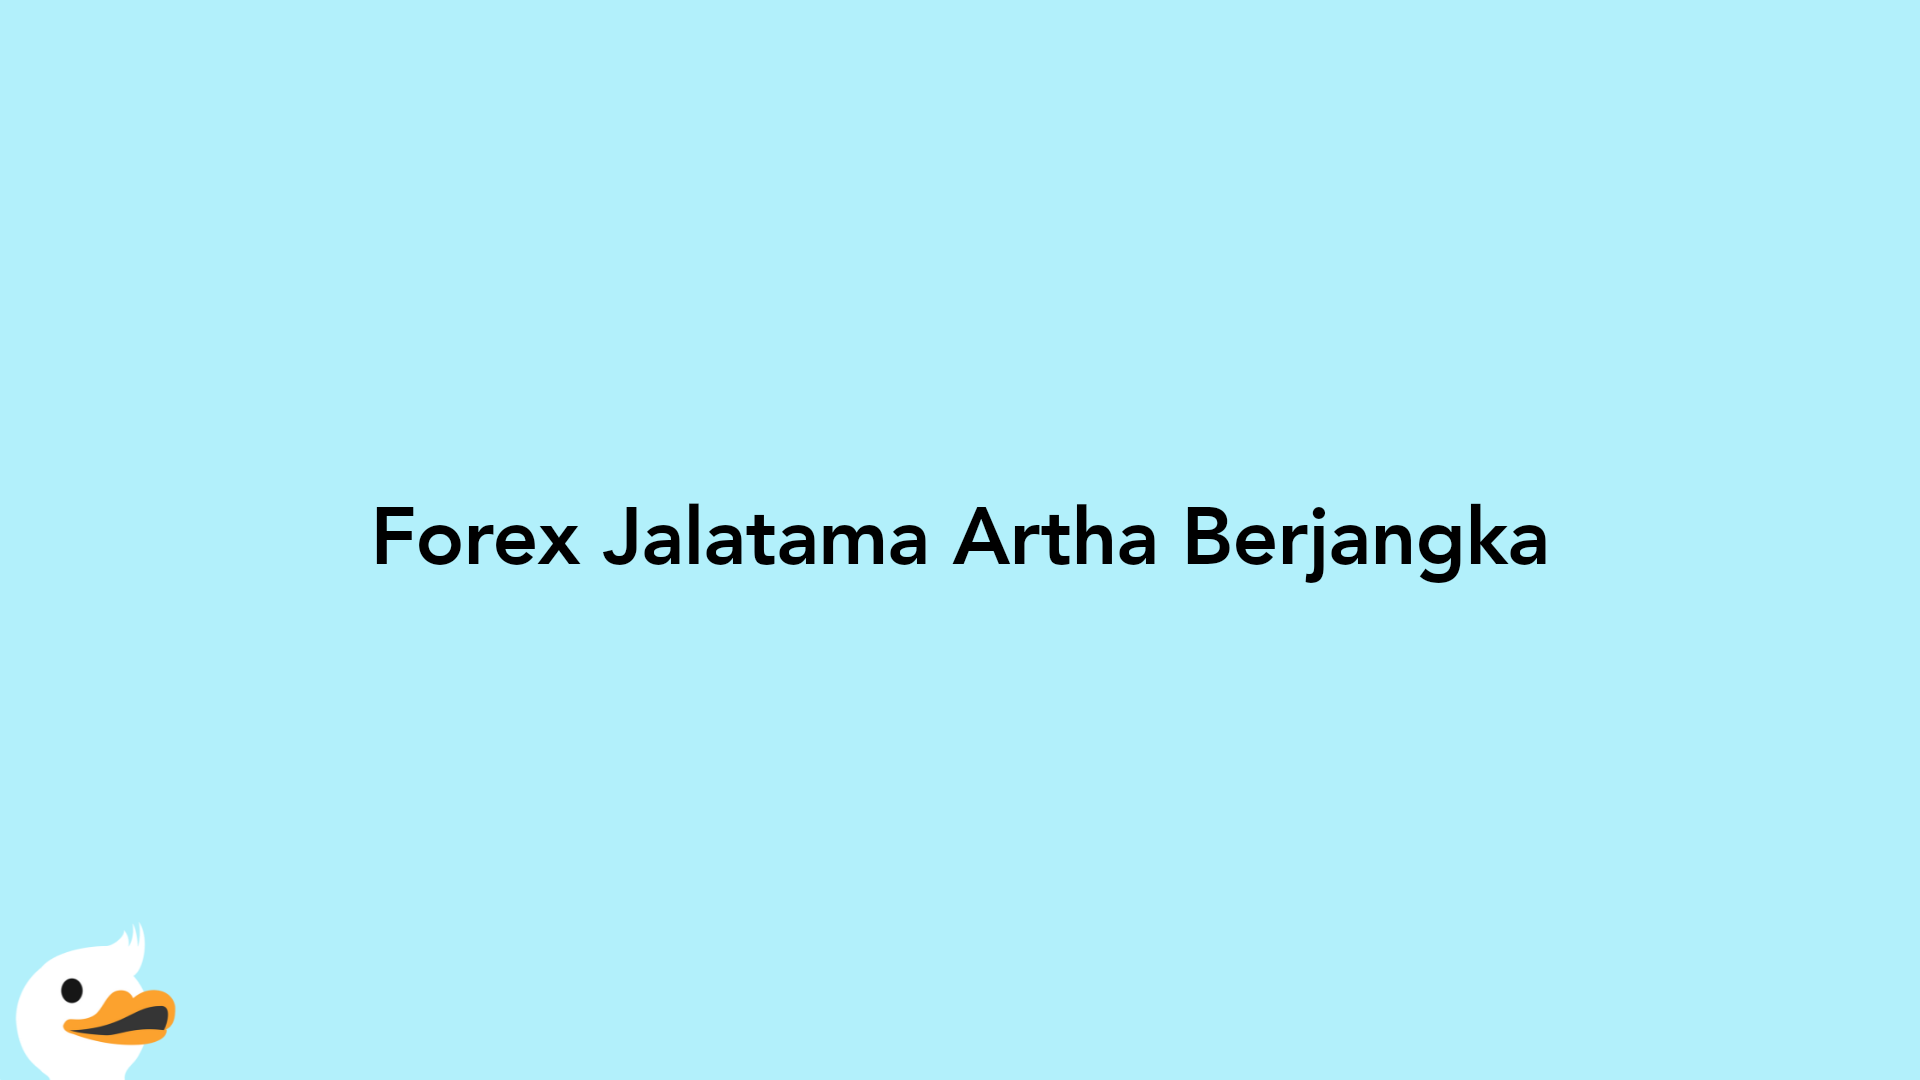 Forex Jalatama Artha Berjangka